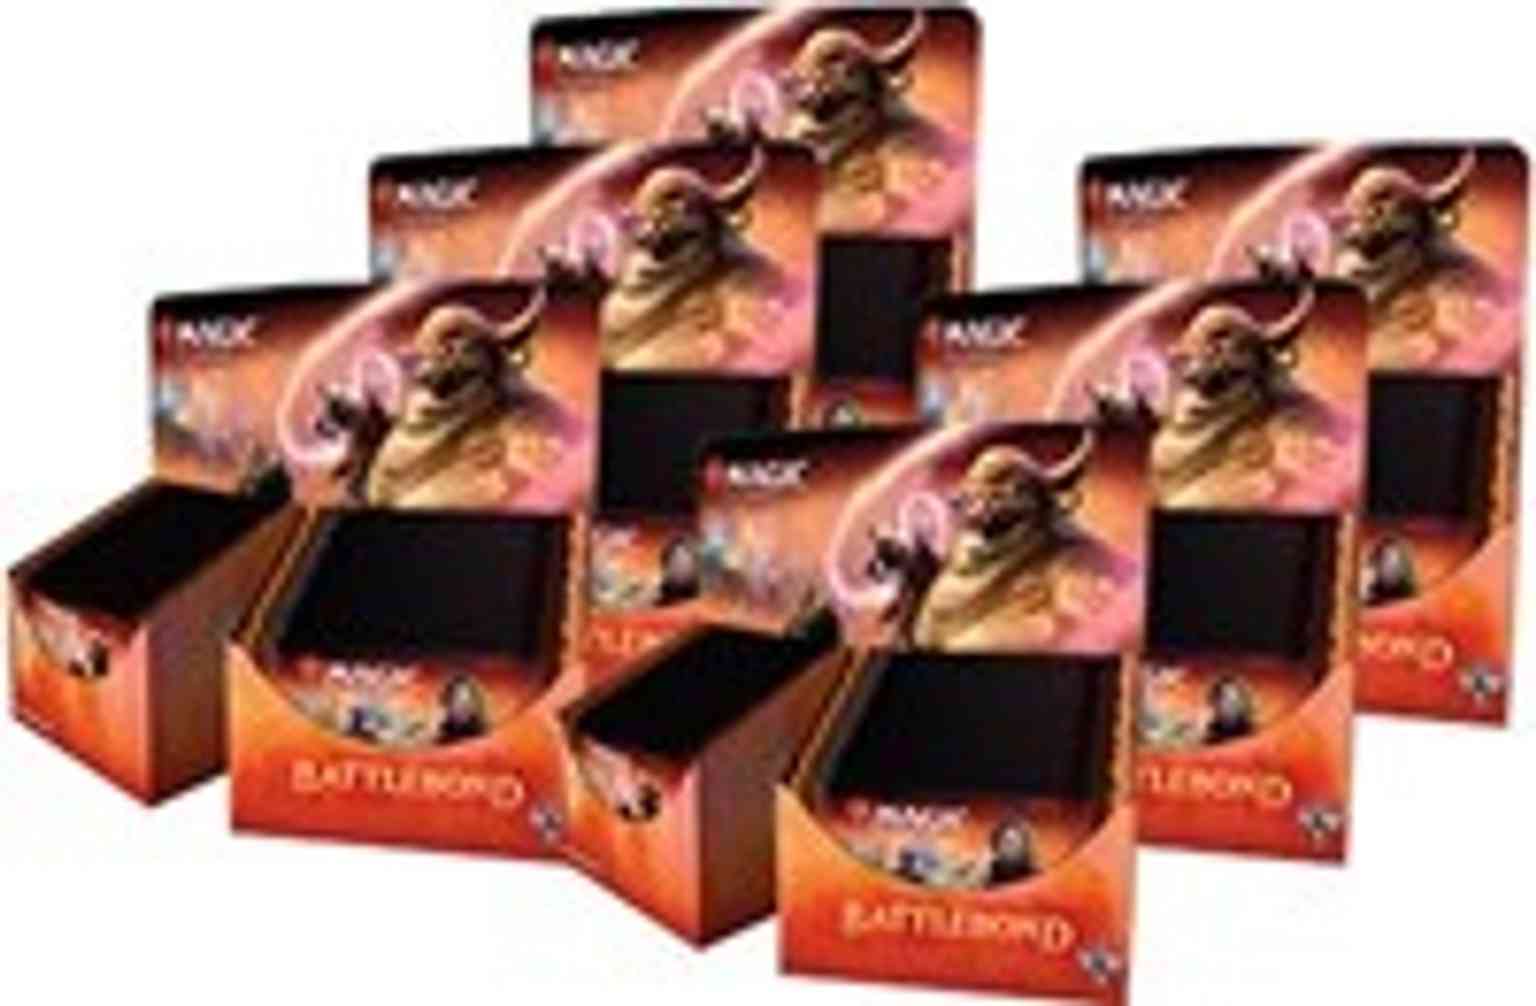 Battlebond - Booster Box Case magic card front